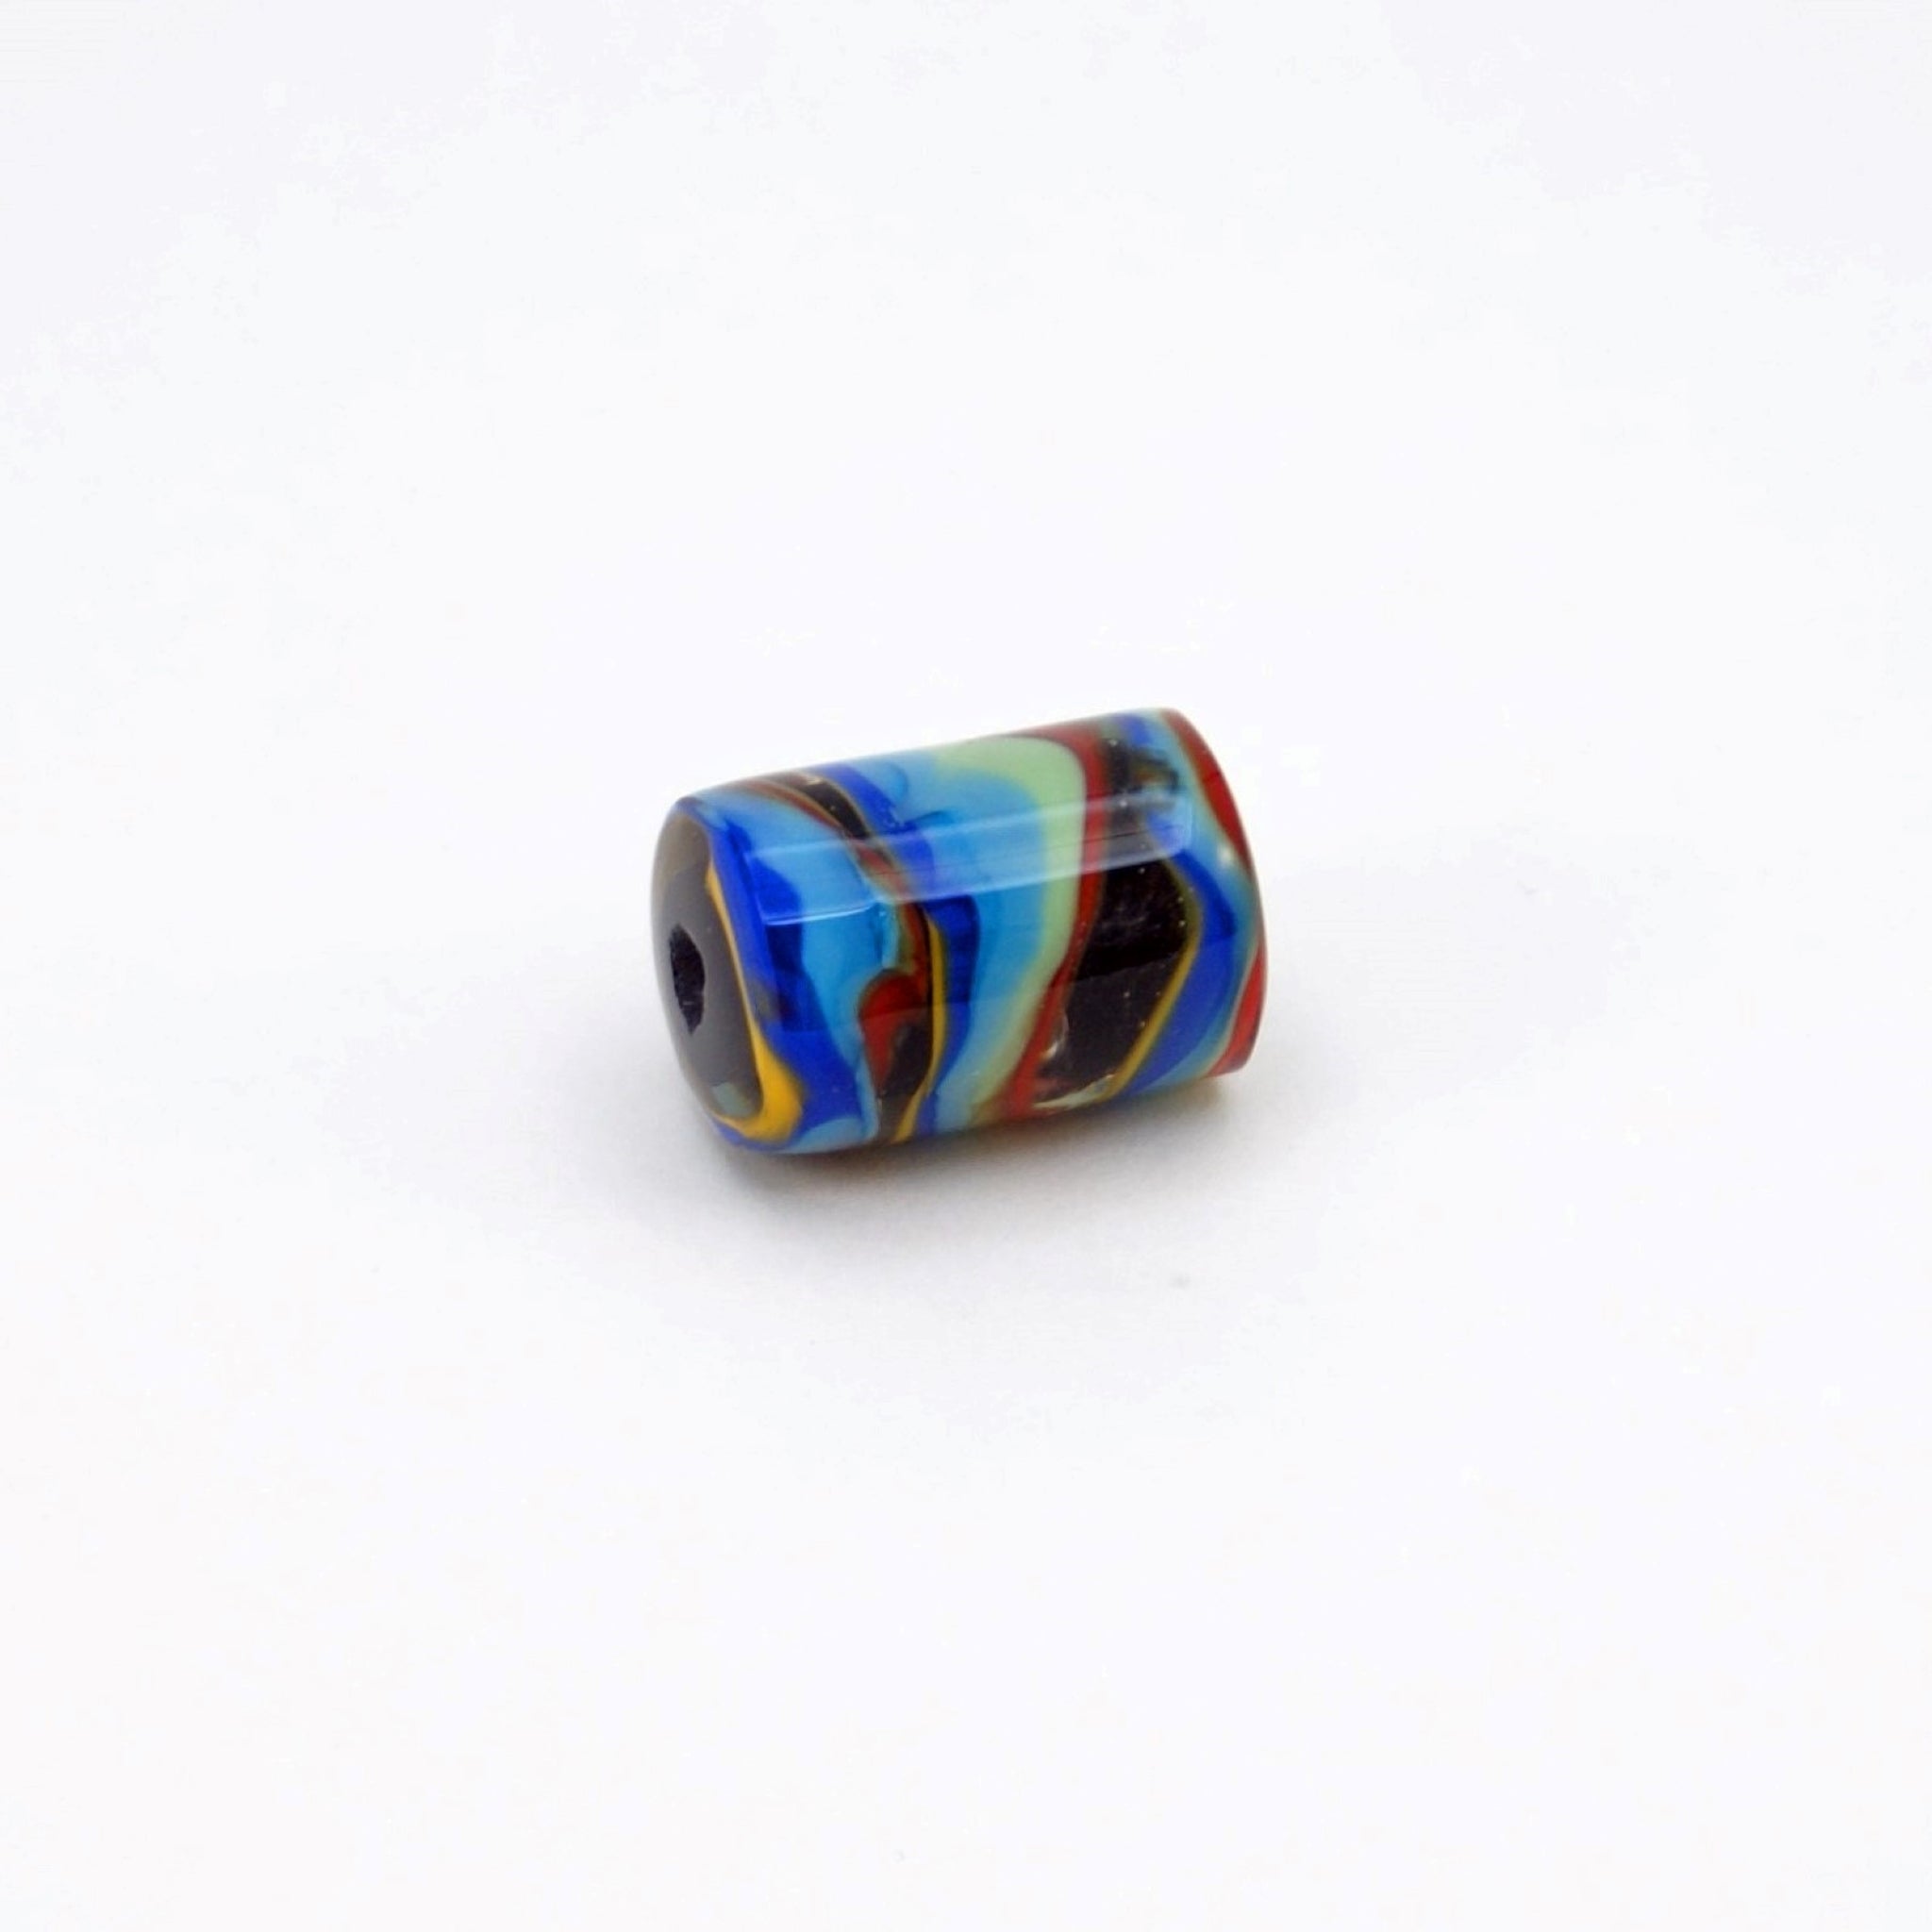 Vibrant blue, red, & yellow swirls on core of black glass lampwork bead